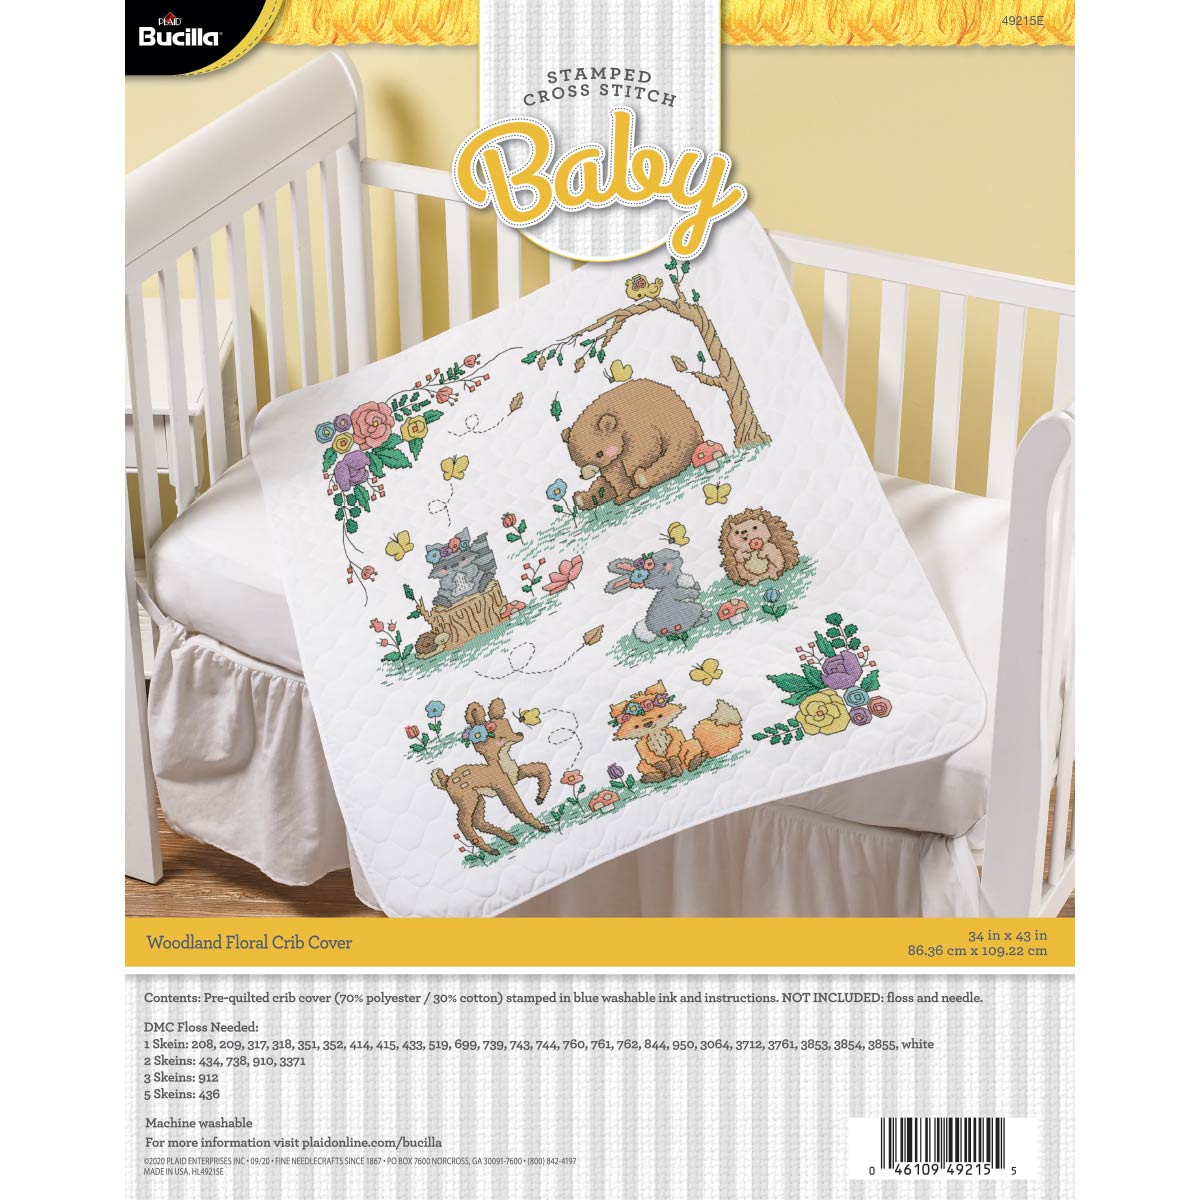 Shop Plaid Bucilla Baby Stamped Cross Stitch Crib Ensembles Woodland Floral Crib Cover 49215E 49215E Plaid Online